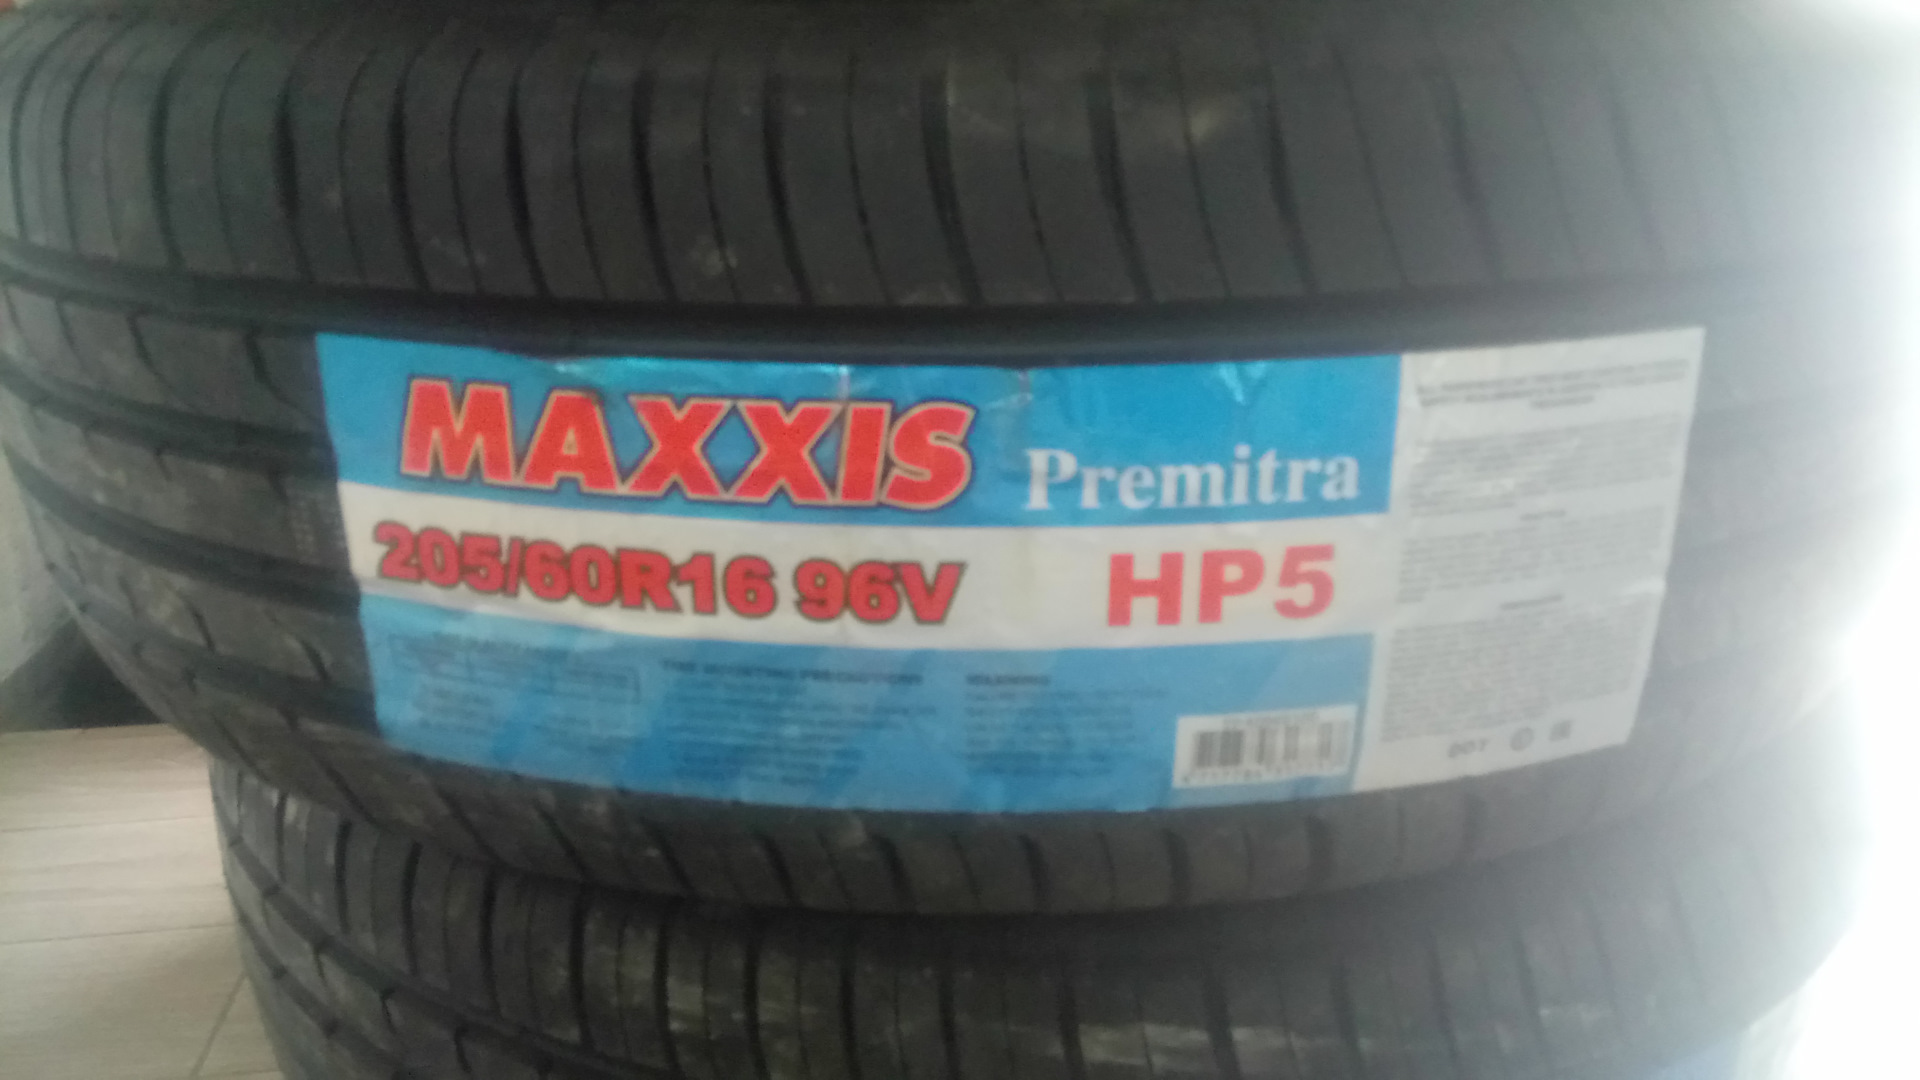 Maxxis hp5 premitra5. Maxxis Premitra hp5. Maxxis Premitra hp5 драйв2. Maxxis Premitra hp5 XL. Maxxis hp5 драйв 2.